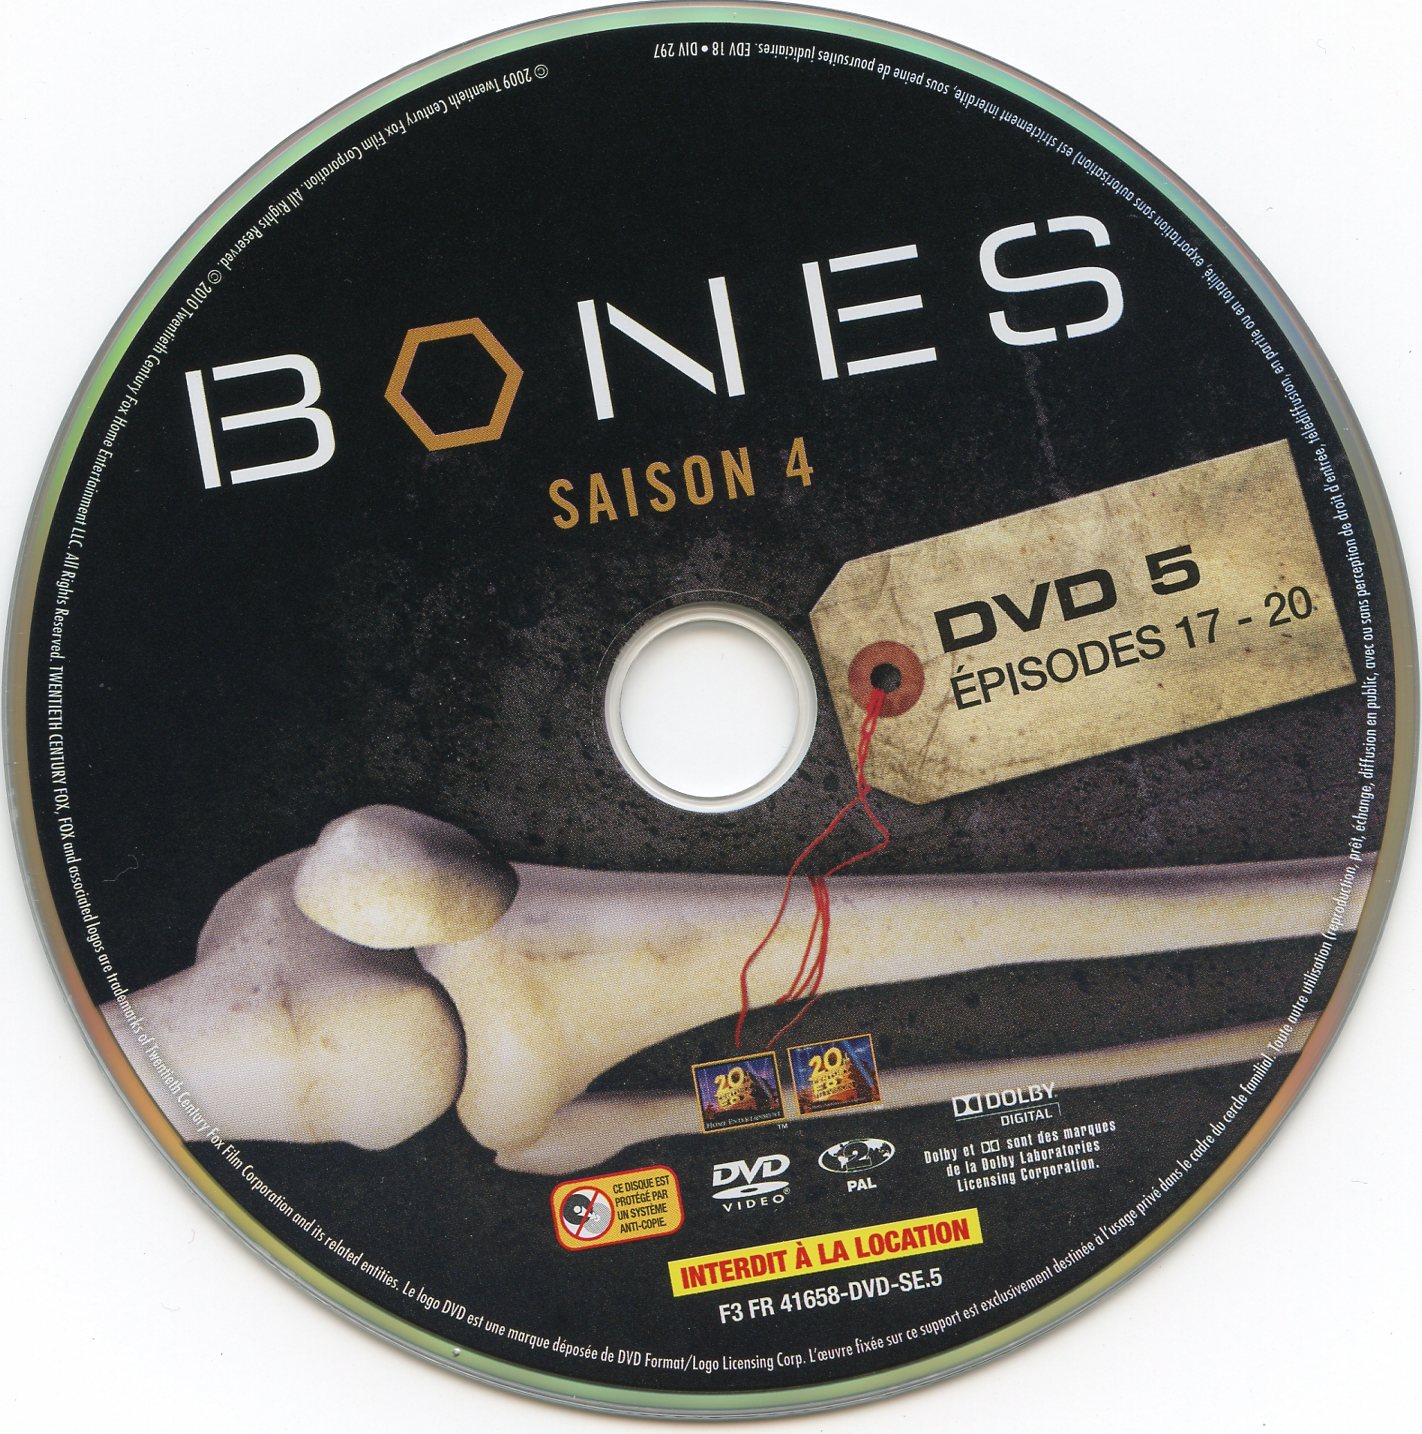 Bones Saison 4 DVD 5